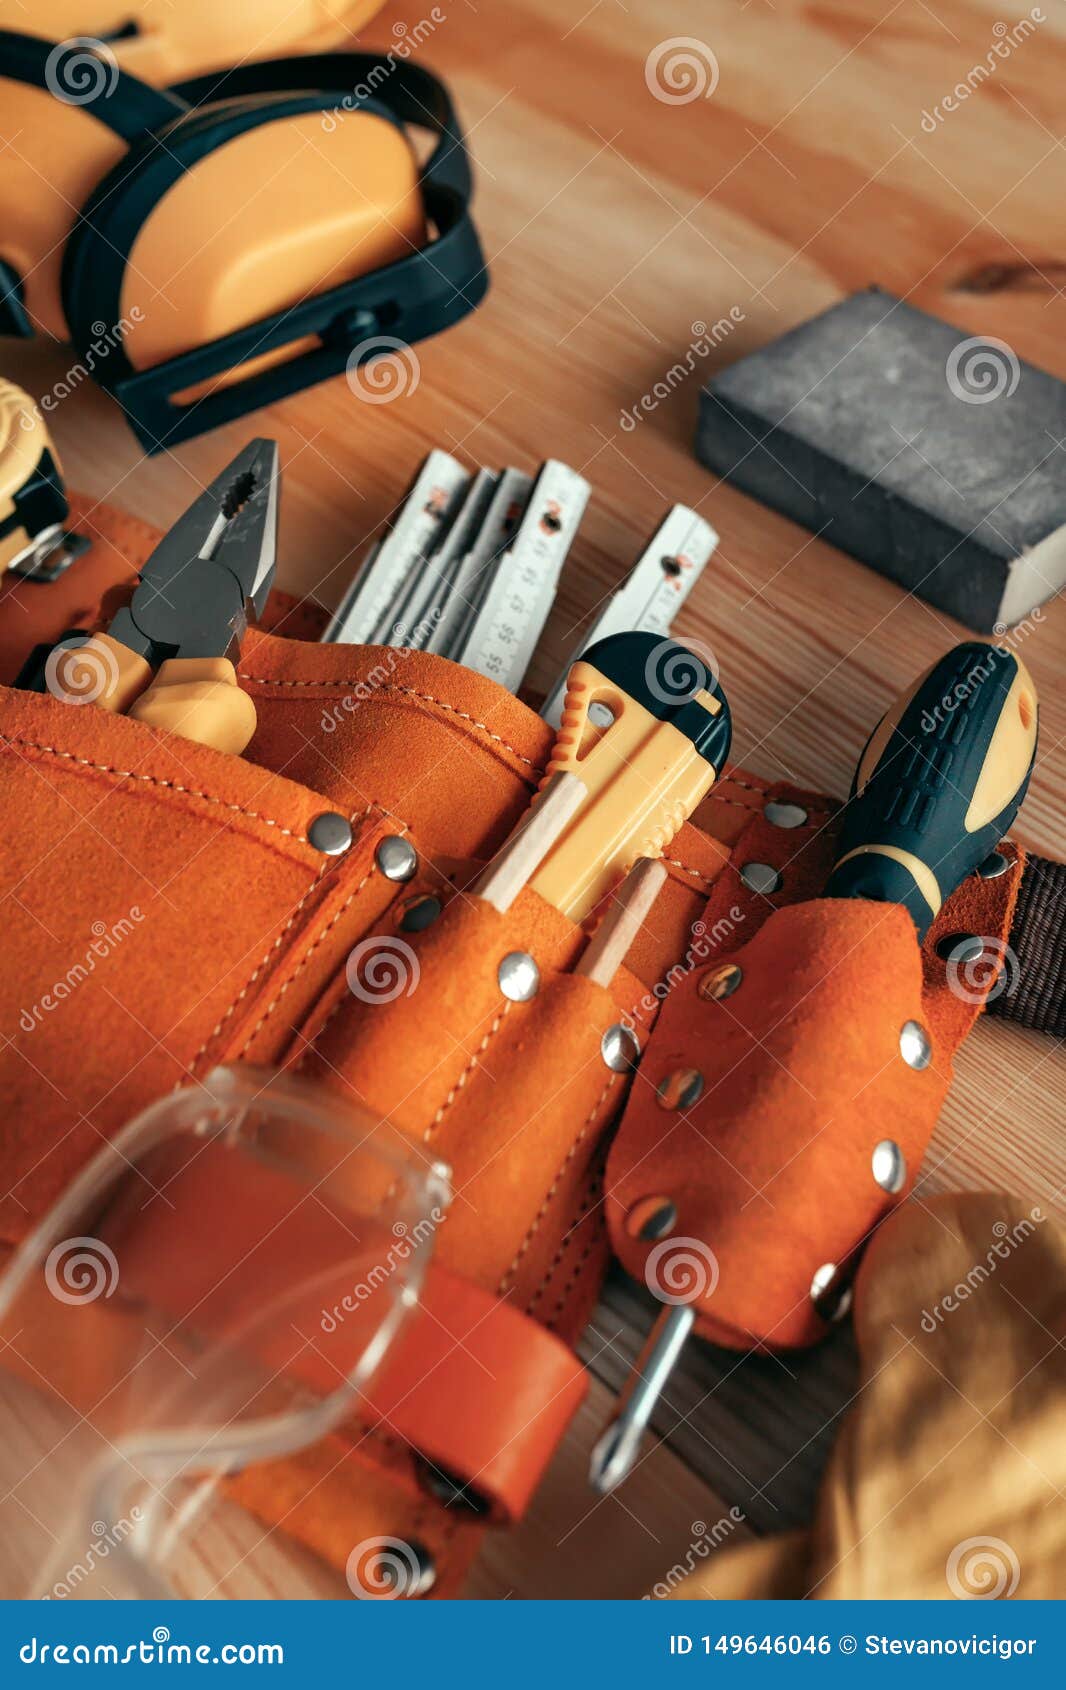 Professional Handyman Tool Belt Stock Photo - Image of meter, safety ...